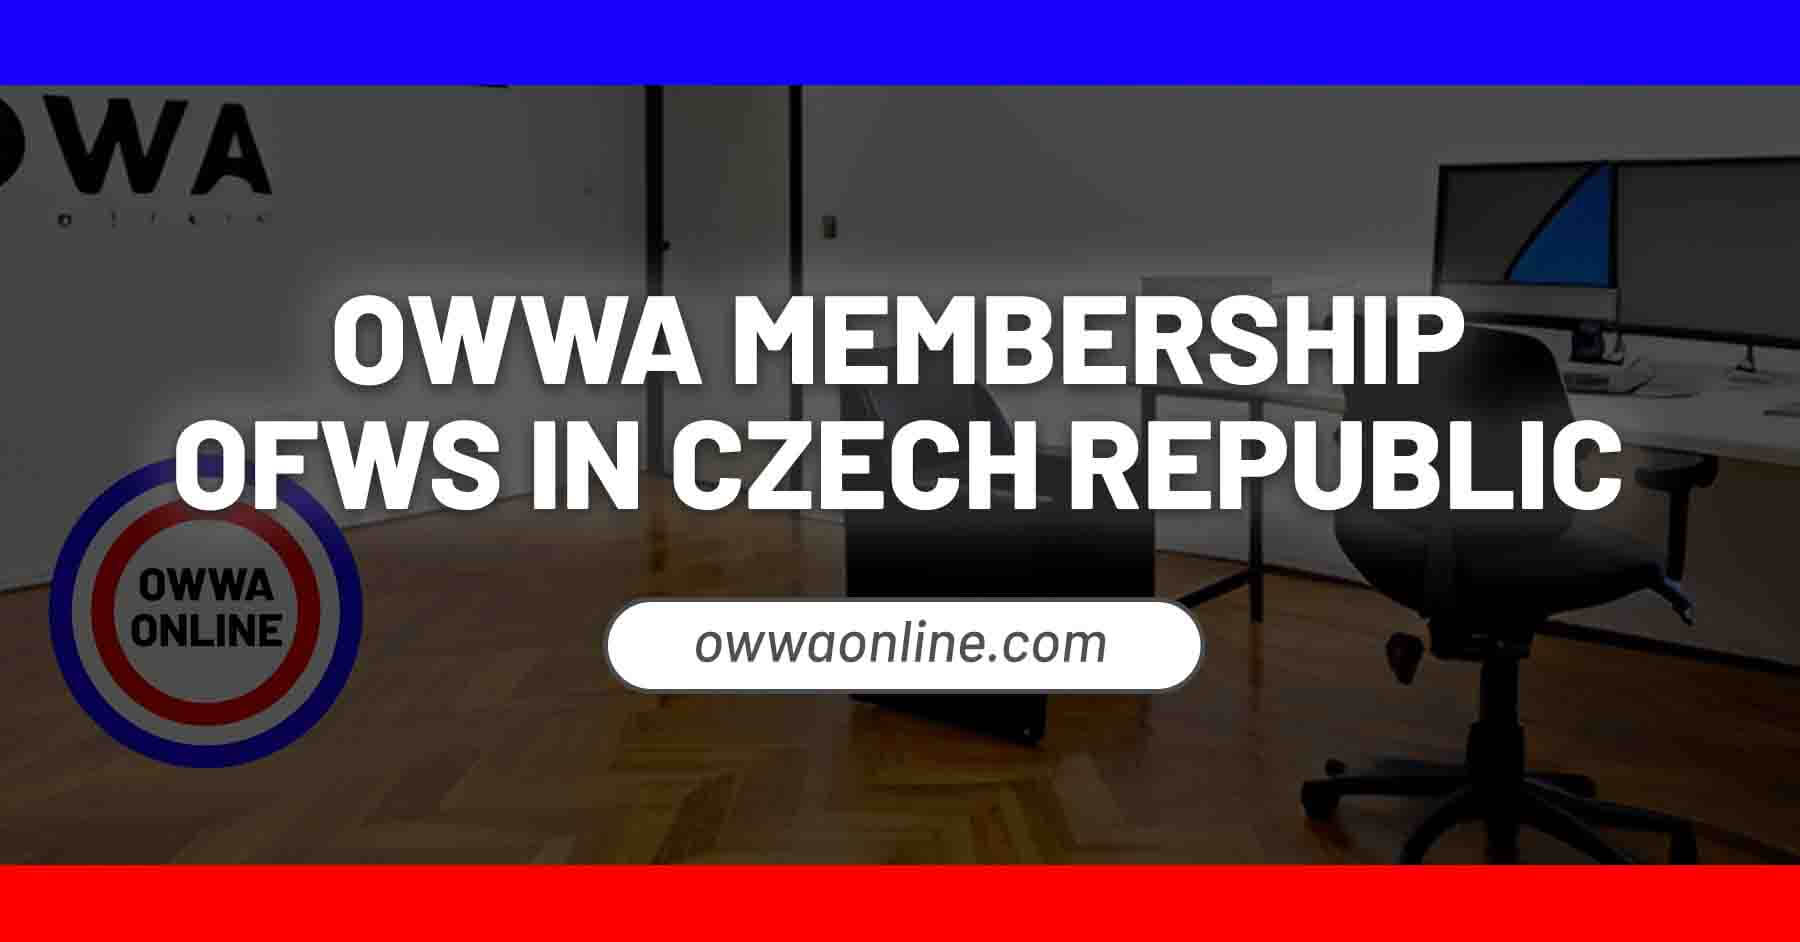 owwa membership application renewal in czech republic